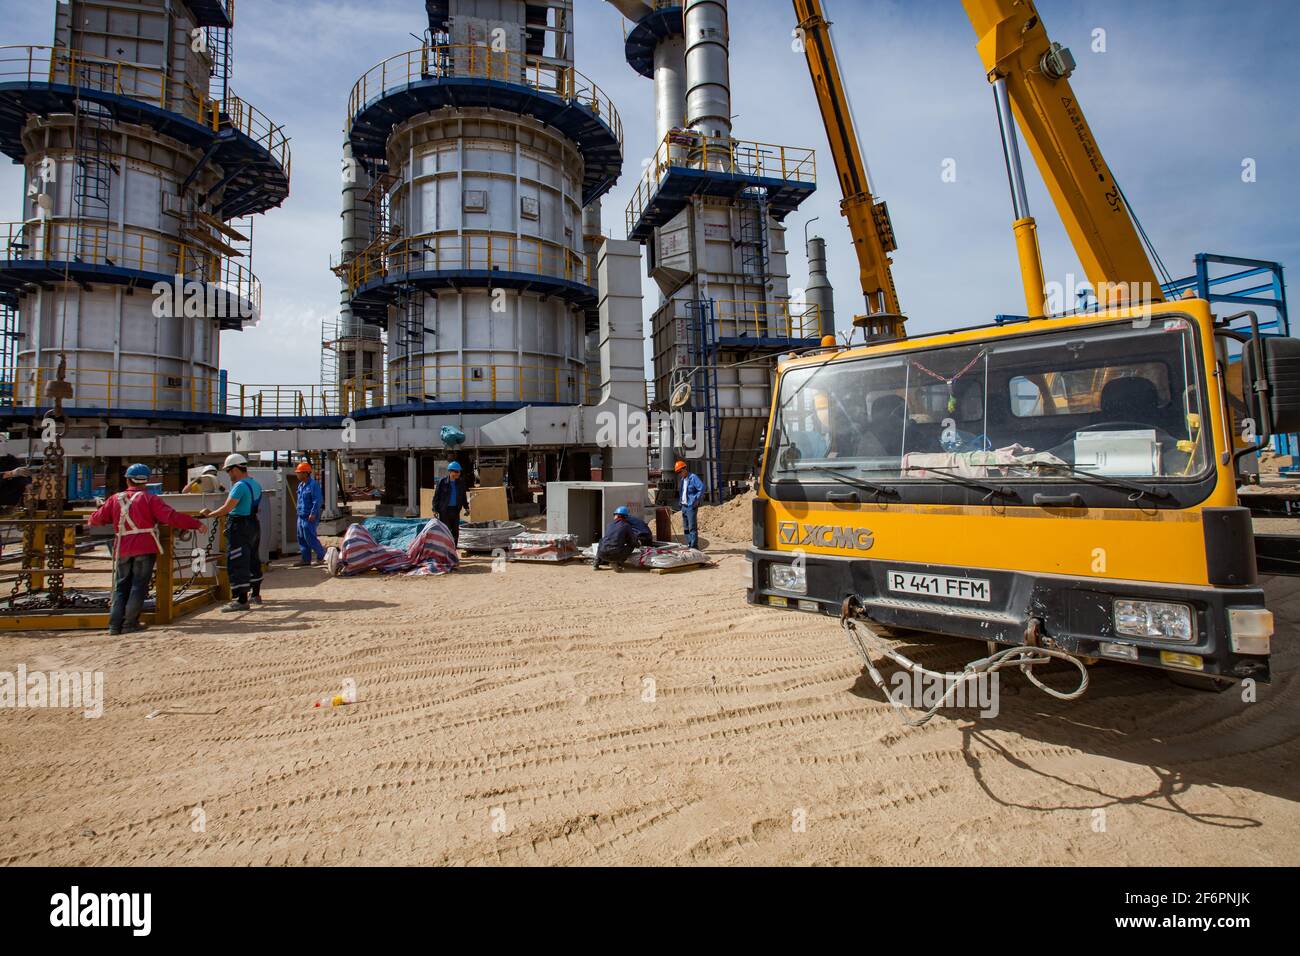 Aktau, Kazakhstan - May 19, 2012: Construction of asphaltic bitumen plant. Grey distillation tower complex, workers and yellow hydraulic hoist. Stock Photo